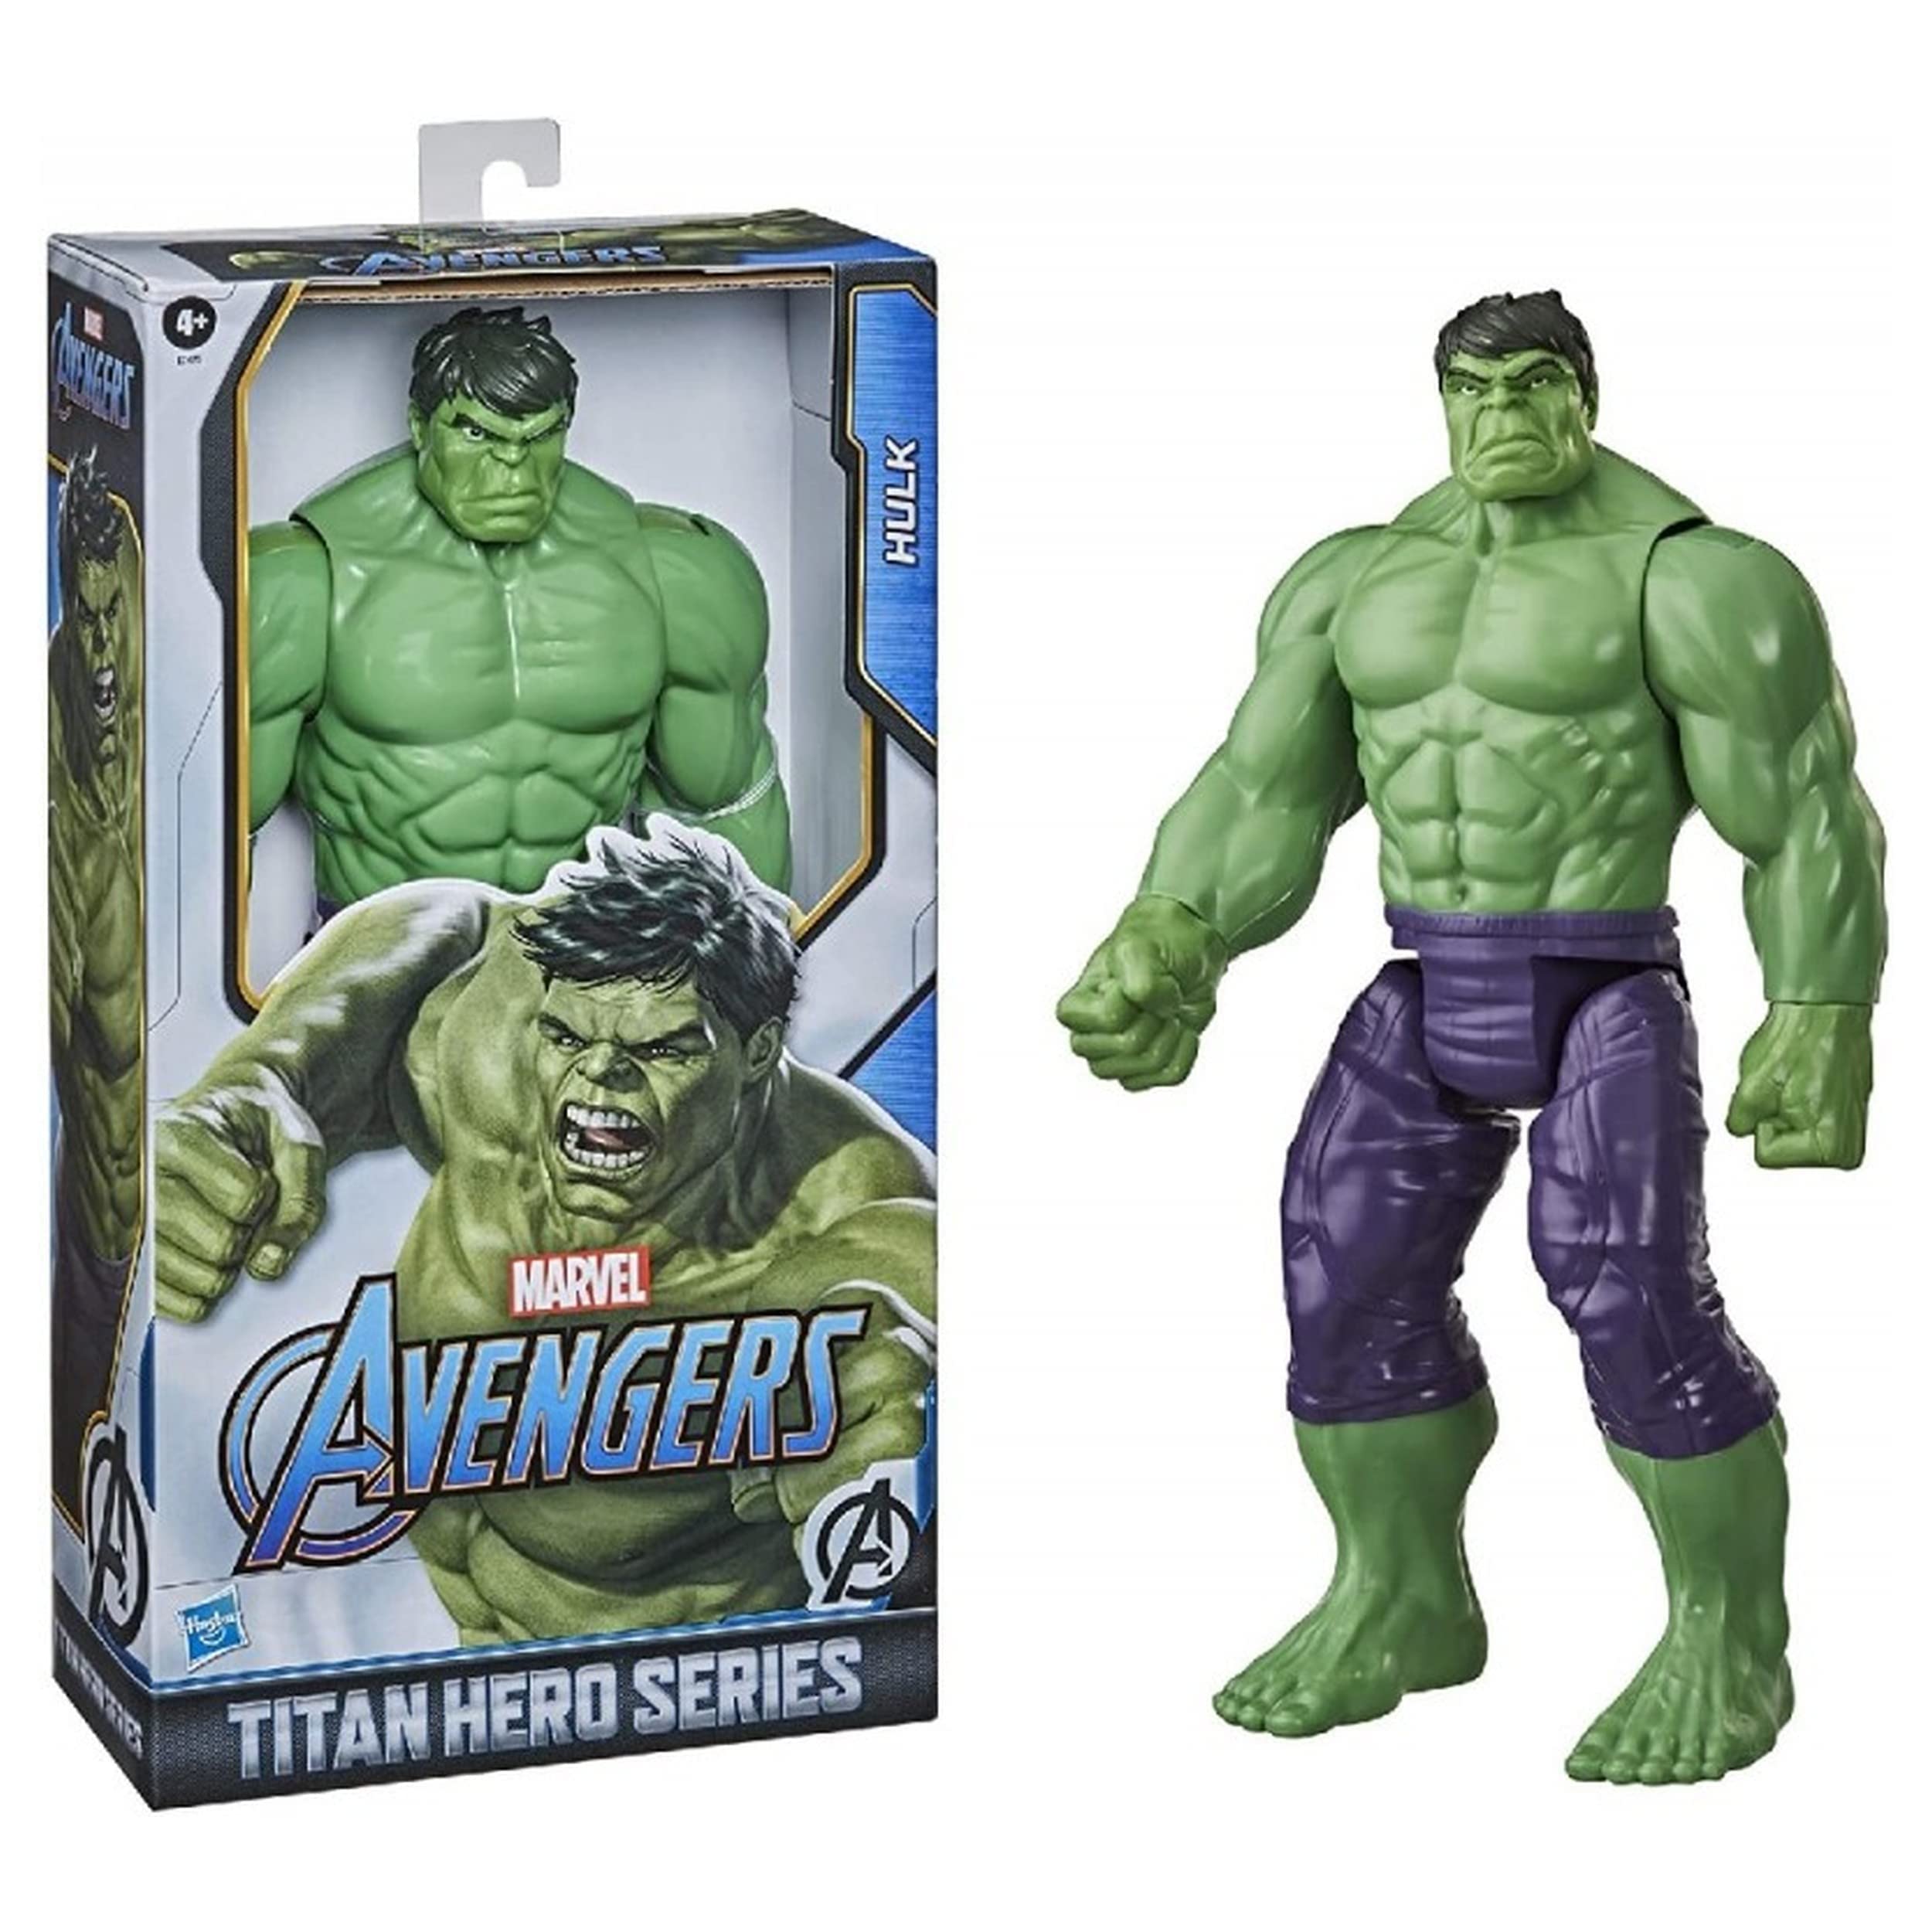 Avengers Marvel Titan Hero Series Blast Gear Deluxe Hulk Action Figure, 30-cm Toy, Inspired byMarvel Comics, for Children Aged 4 and Up,Green